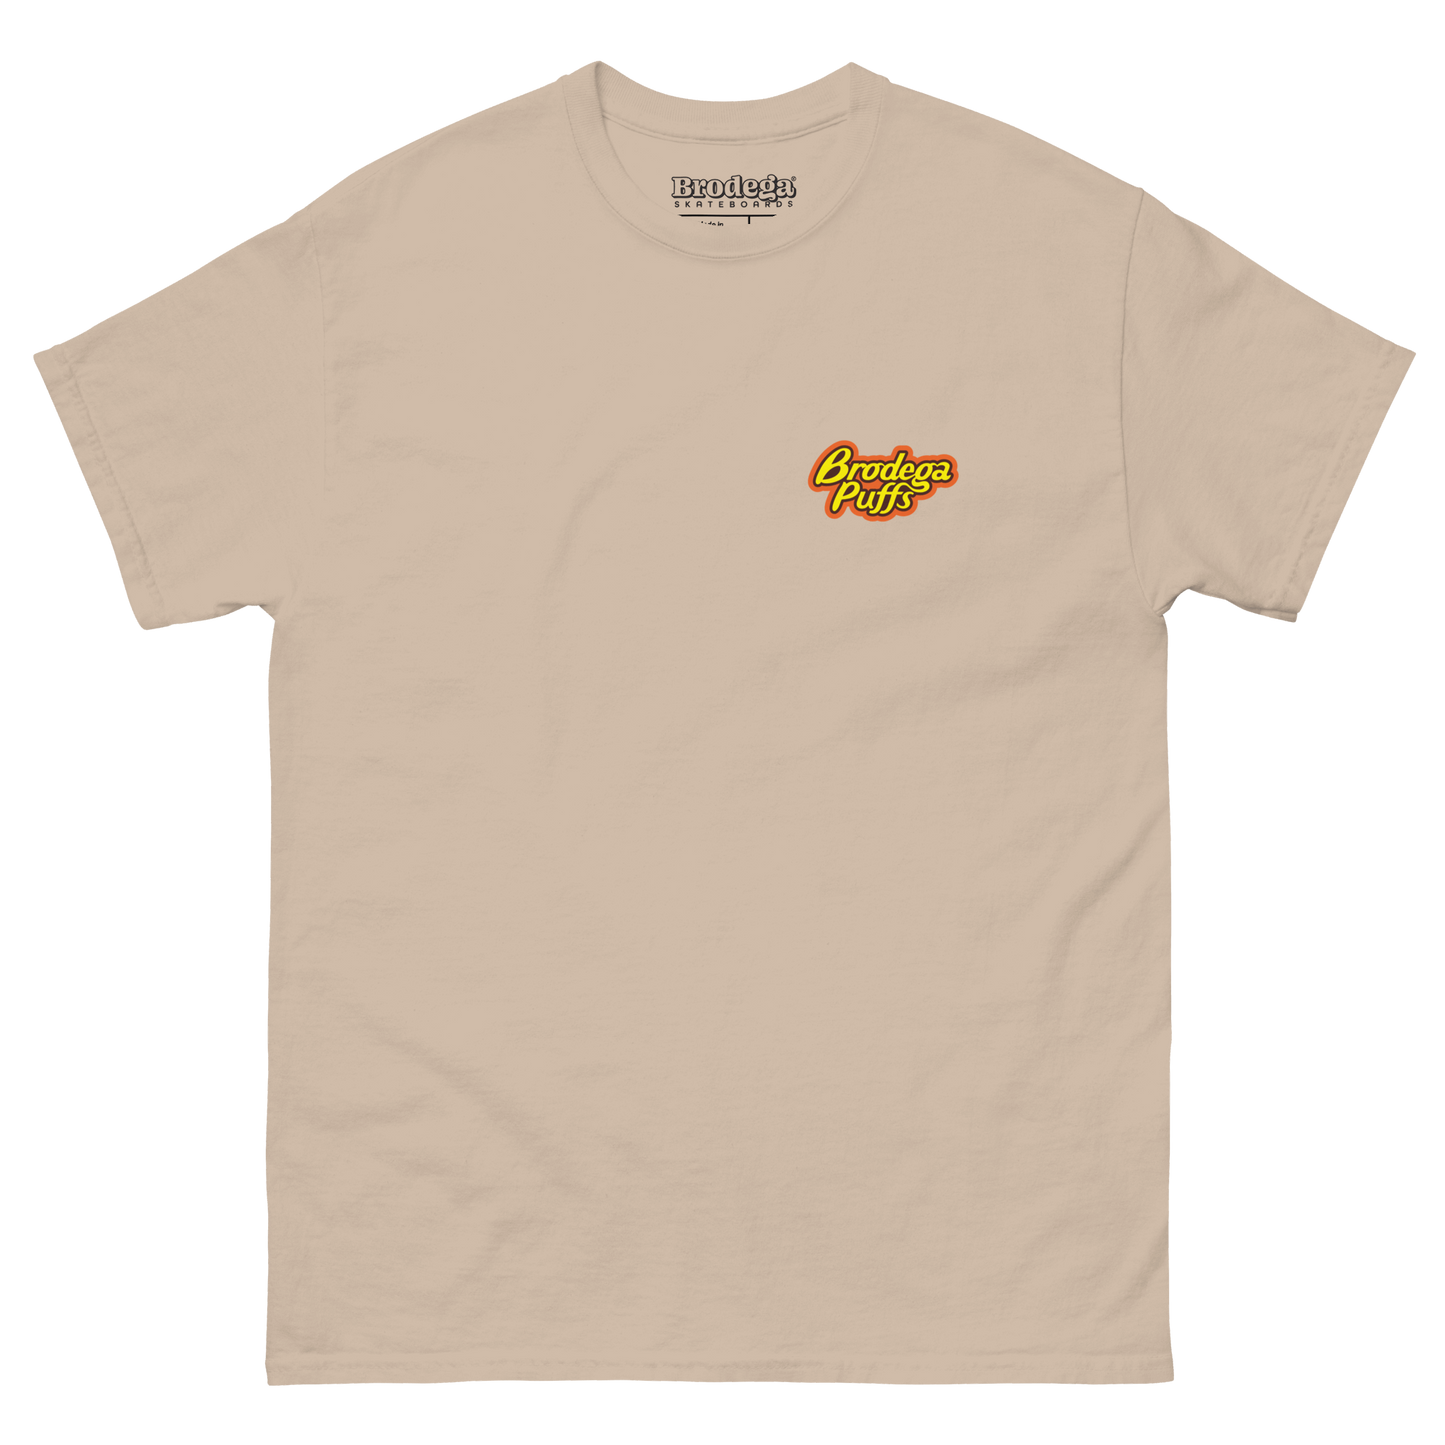 Bowl-O-Puffs / T-Shirt